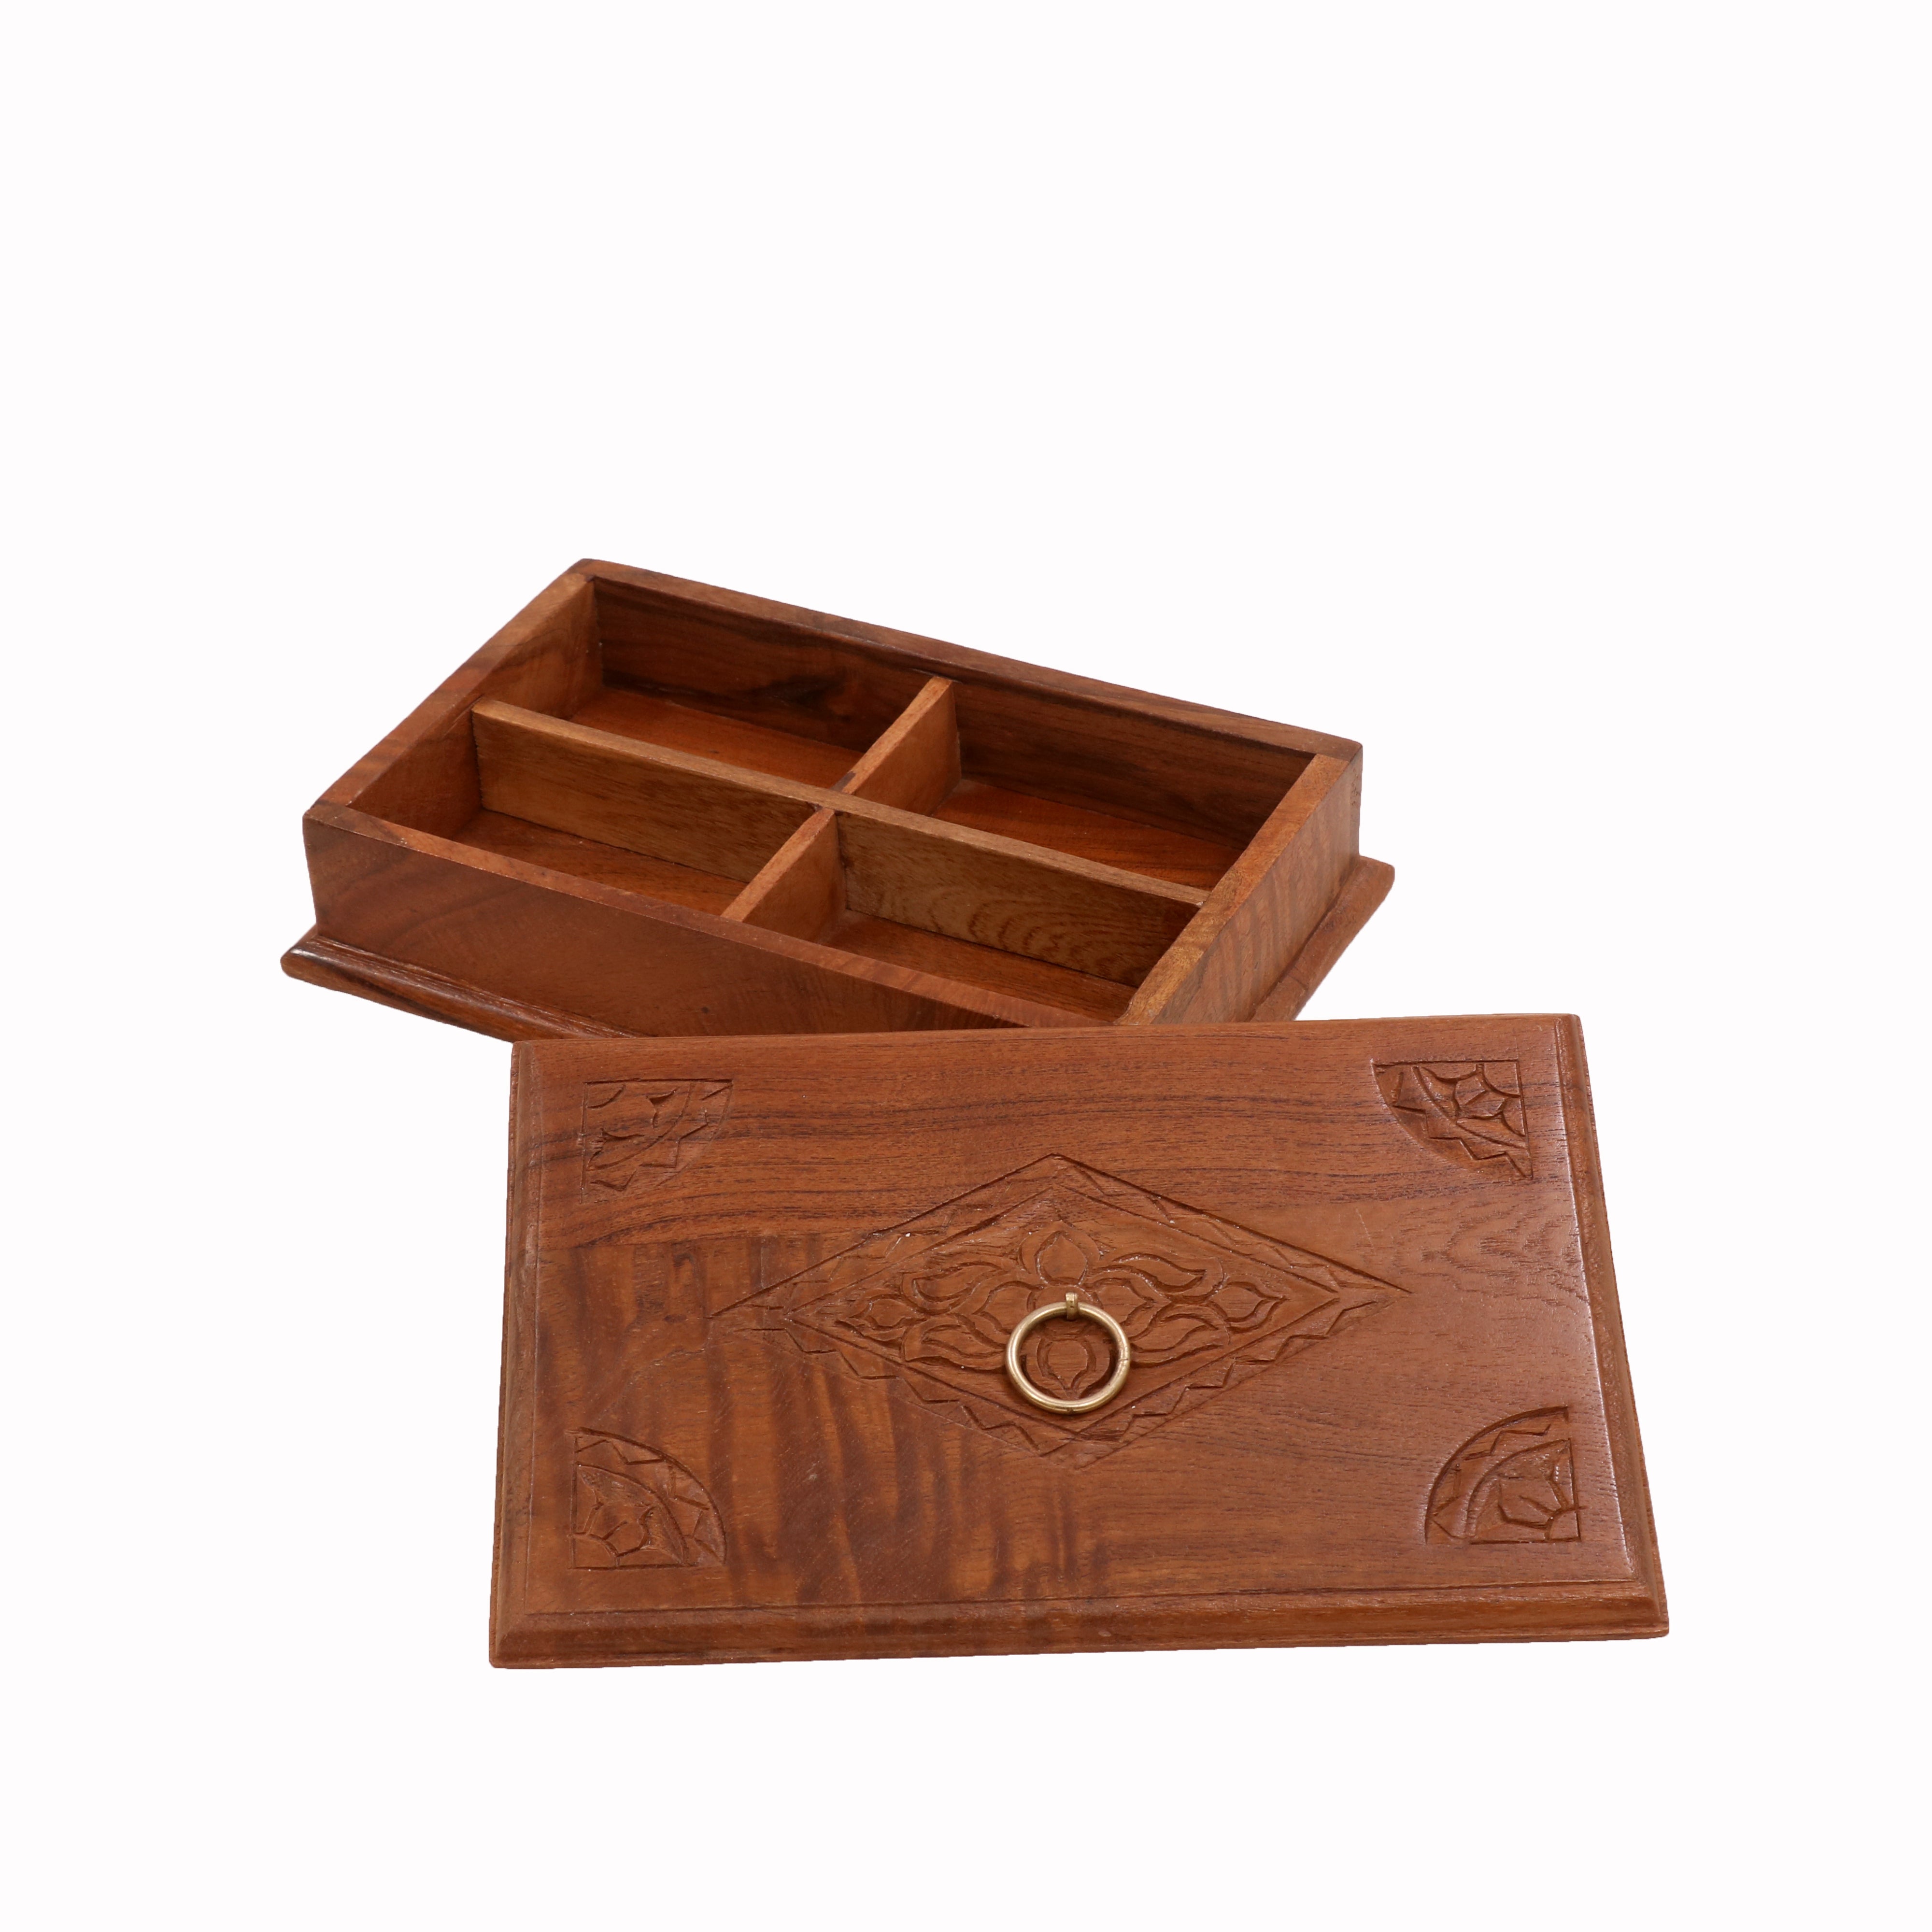 Diamond Engraved Wooden Box Wooden Box